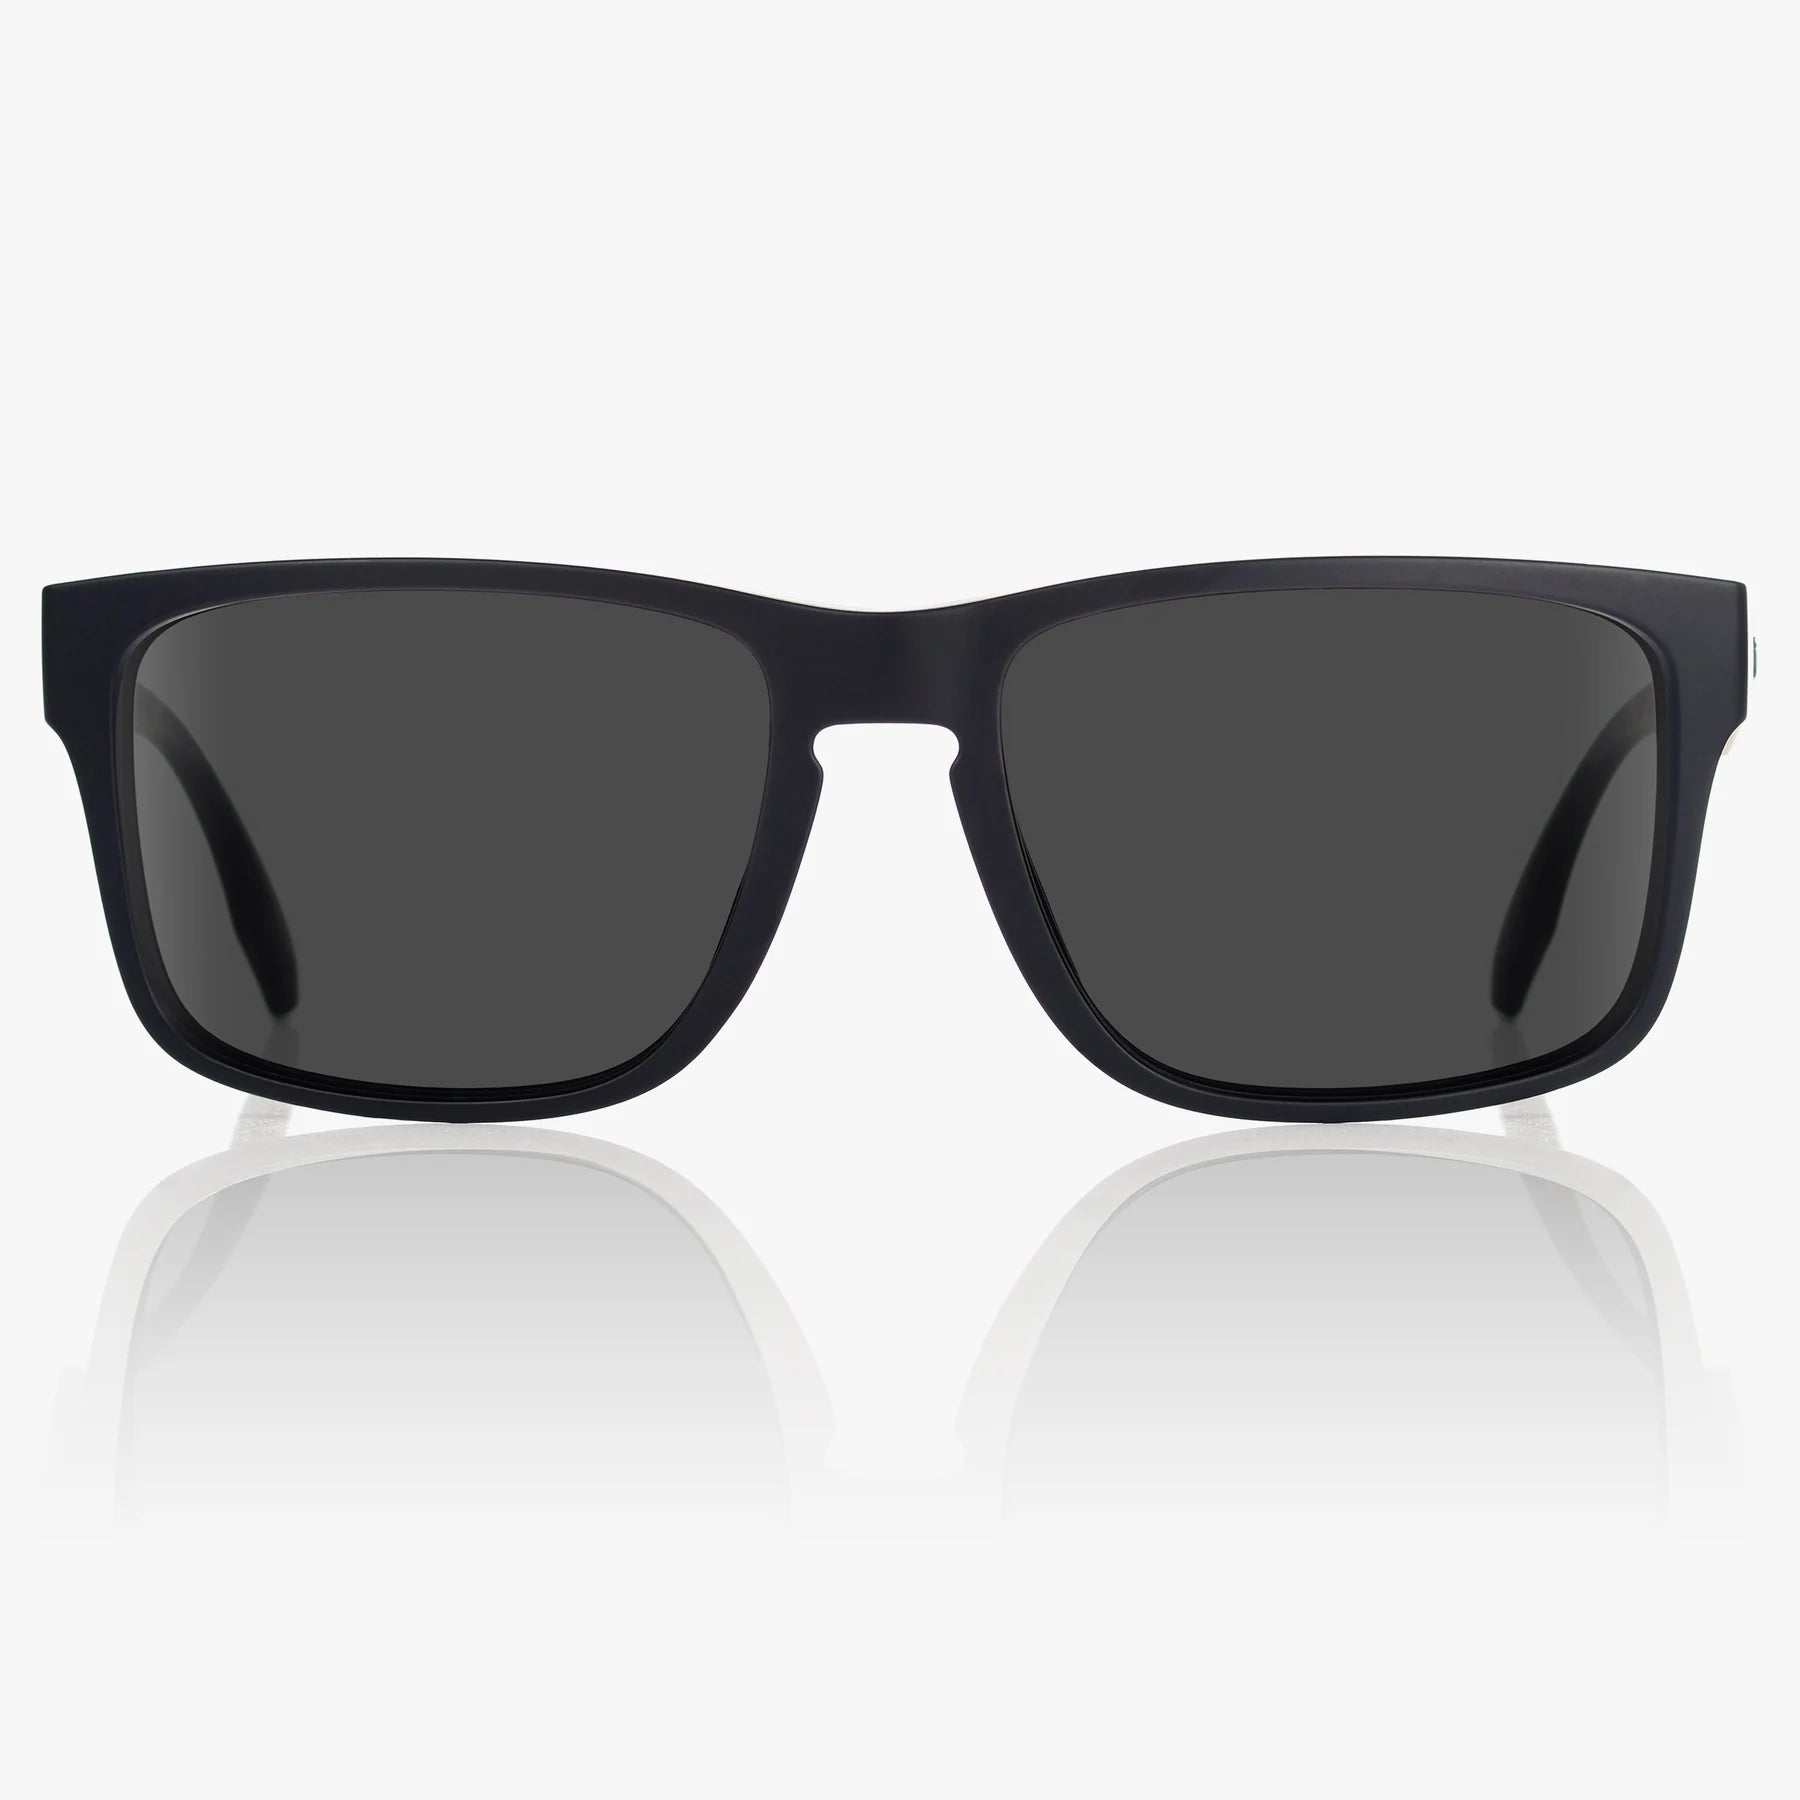 Madson Pivot Sunglasses Black Matte / Grey Polarized